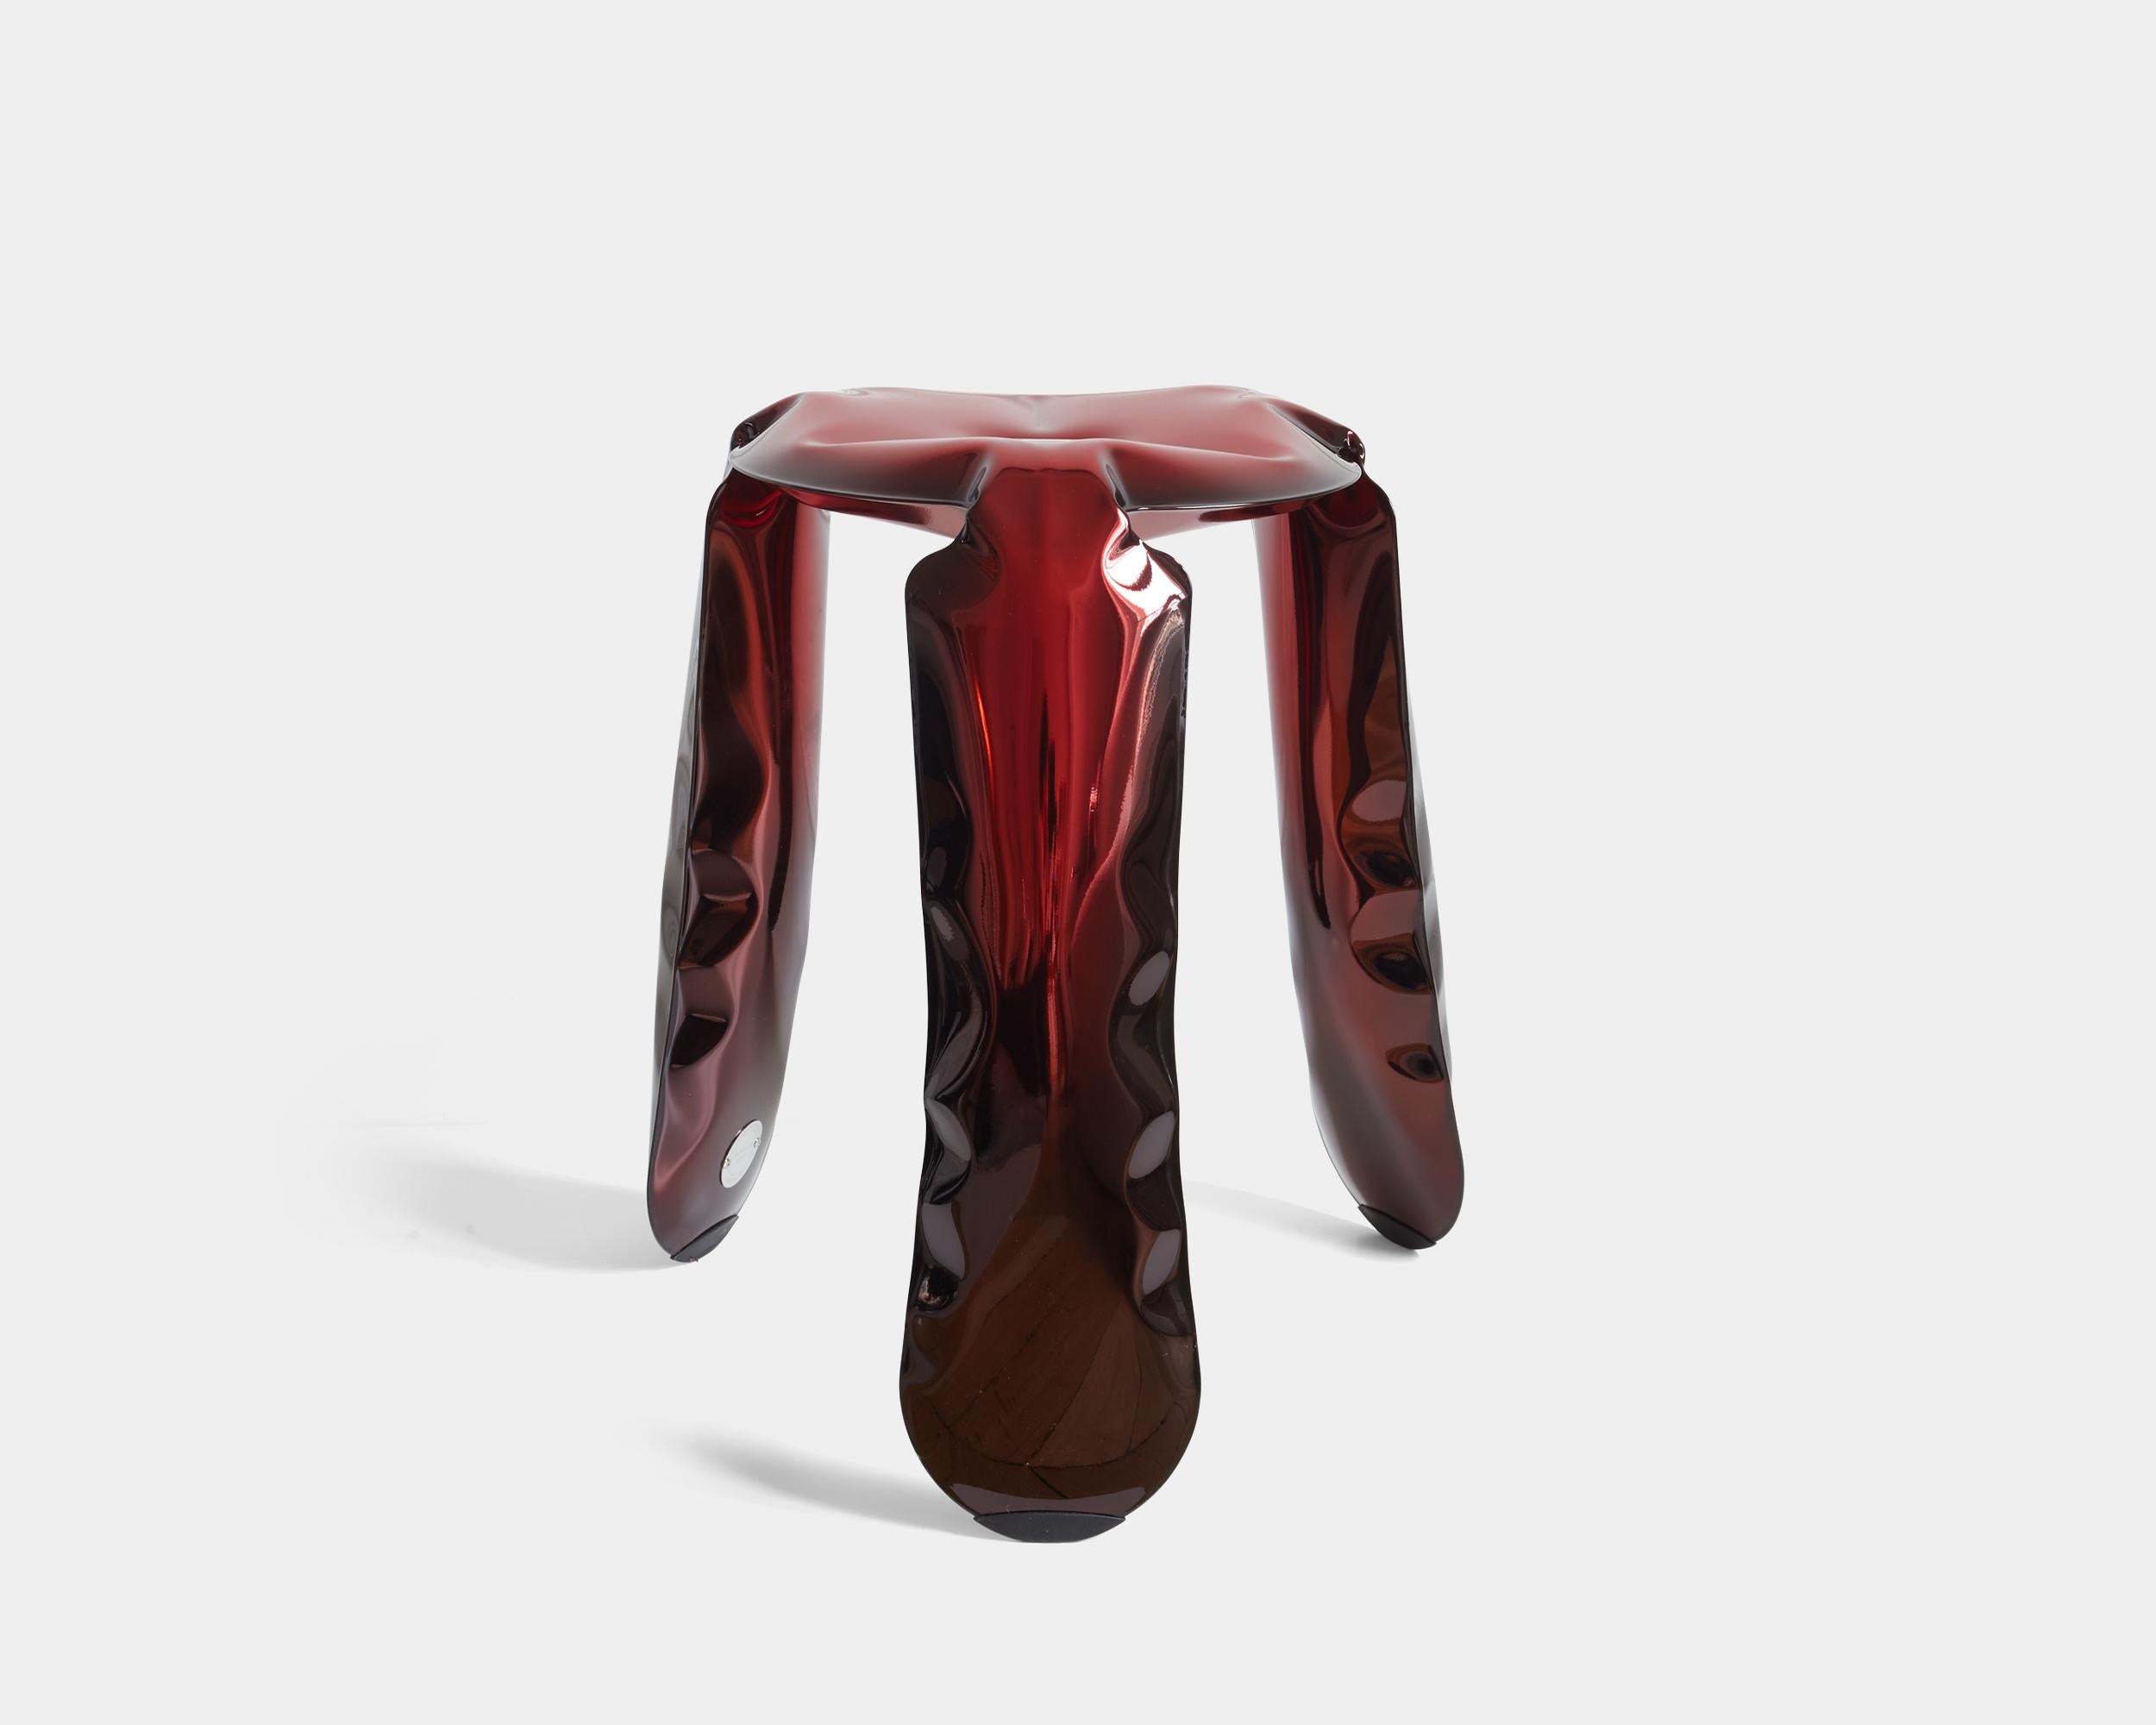 Stainless Steel Contemporary Stool 'Plopp' by Zieta, Standard Size, Rubin Red For Sale